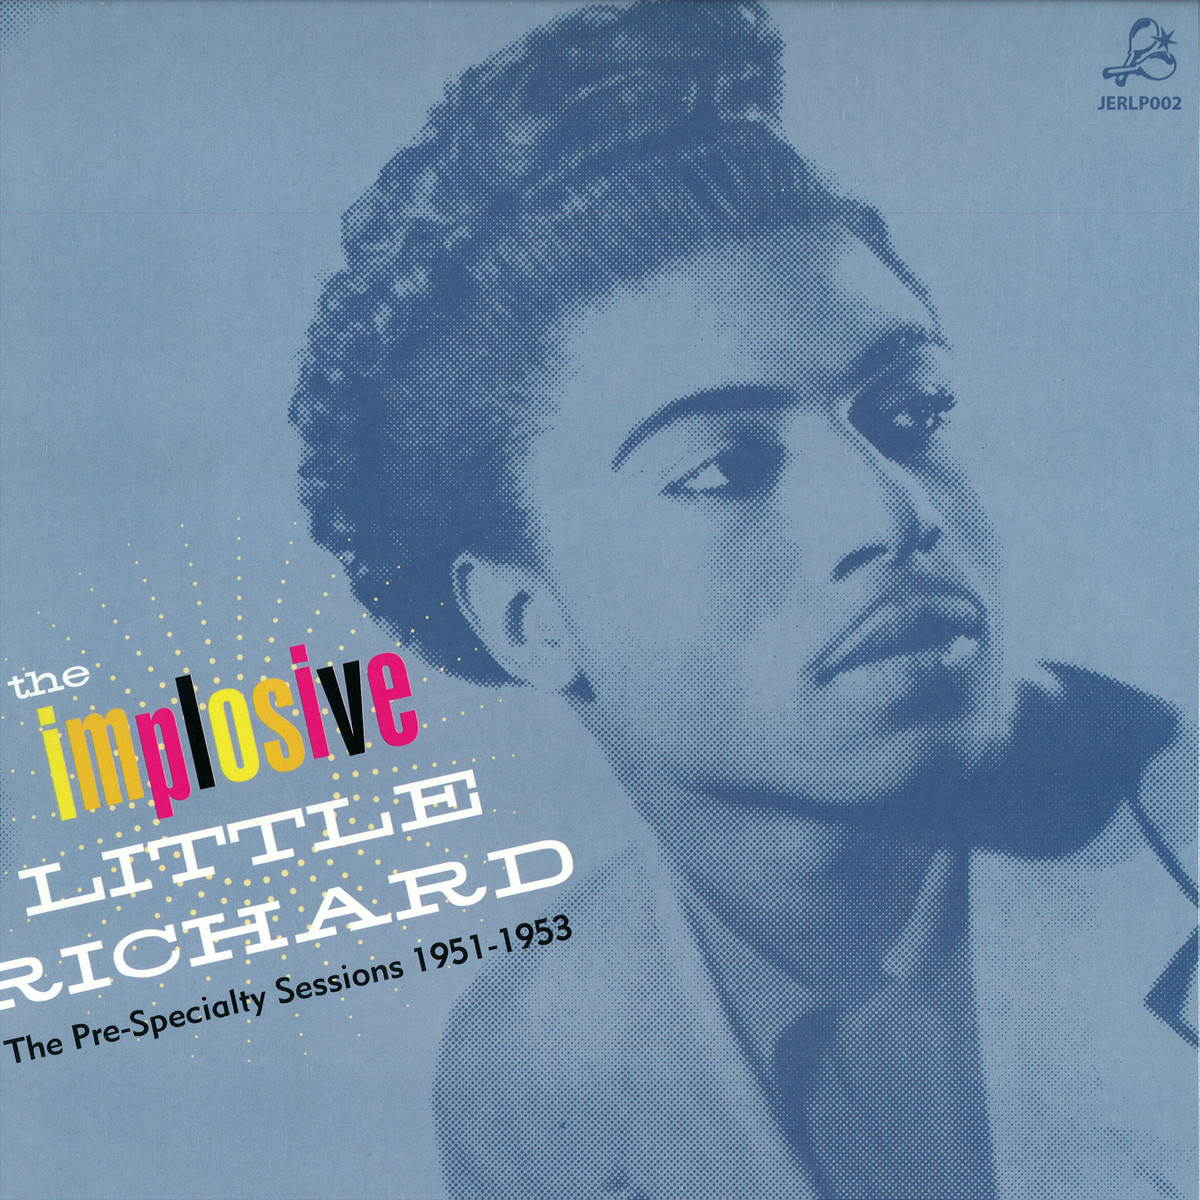 Виниловые пластинки little Richard ,the Specialty sessions. Фотоальбомов little Richard. Little Richard винил на Антропе. 1951 1953